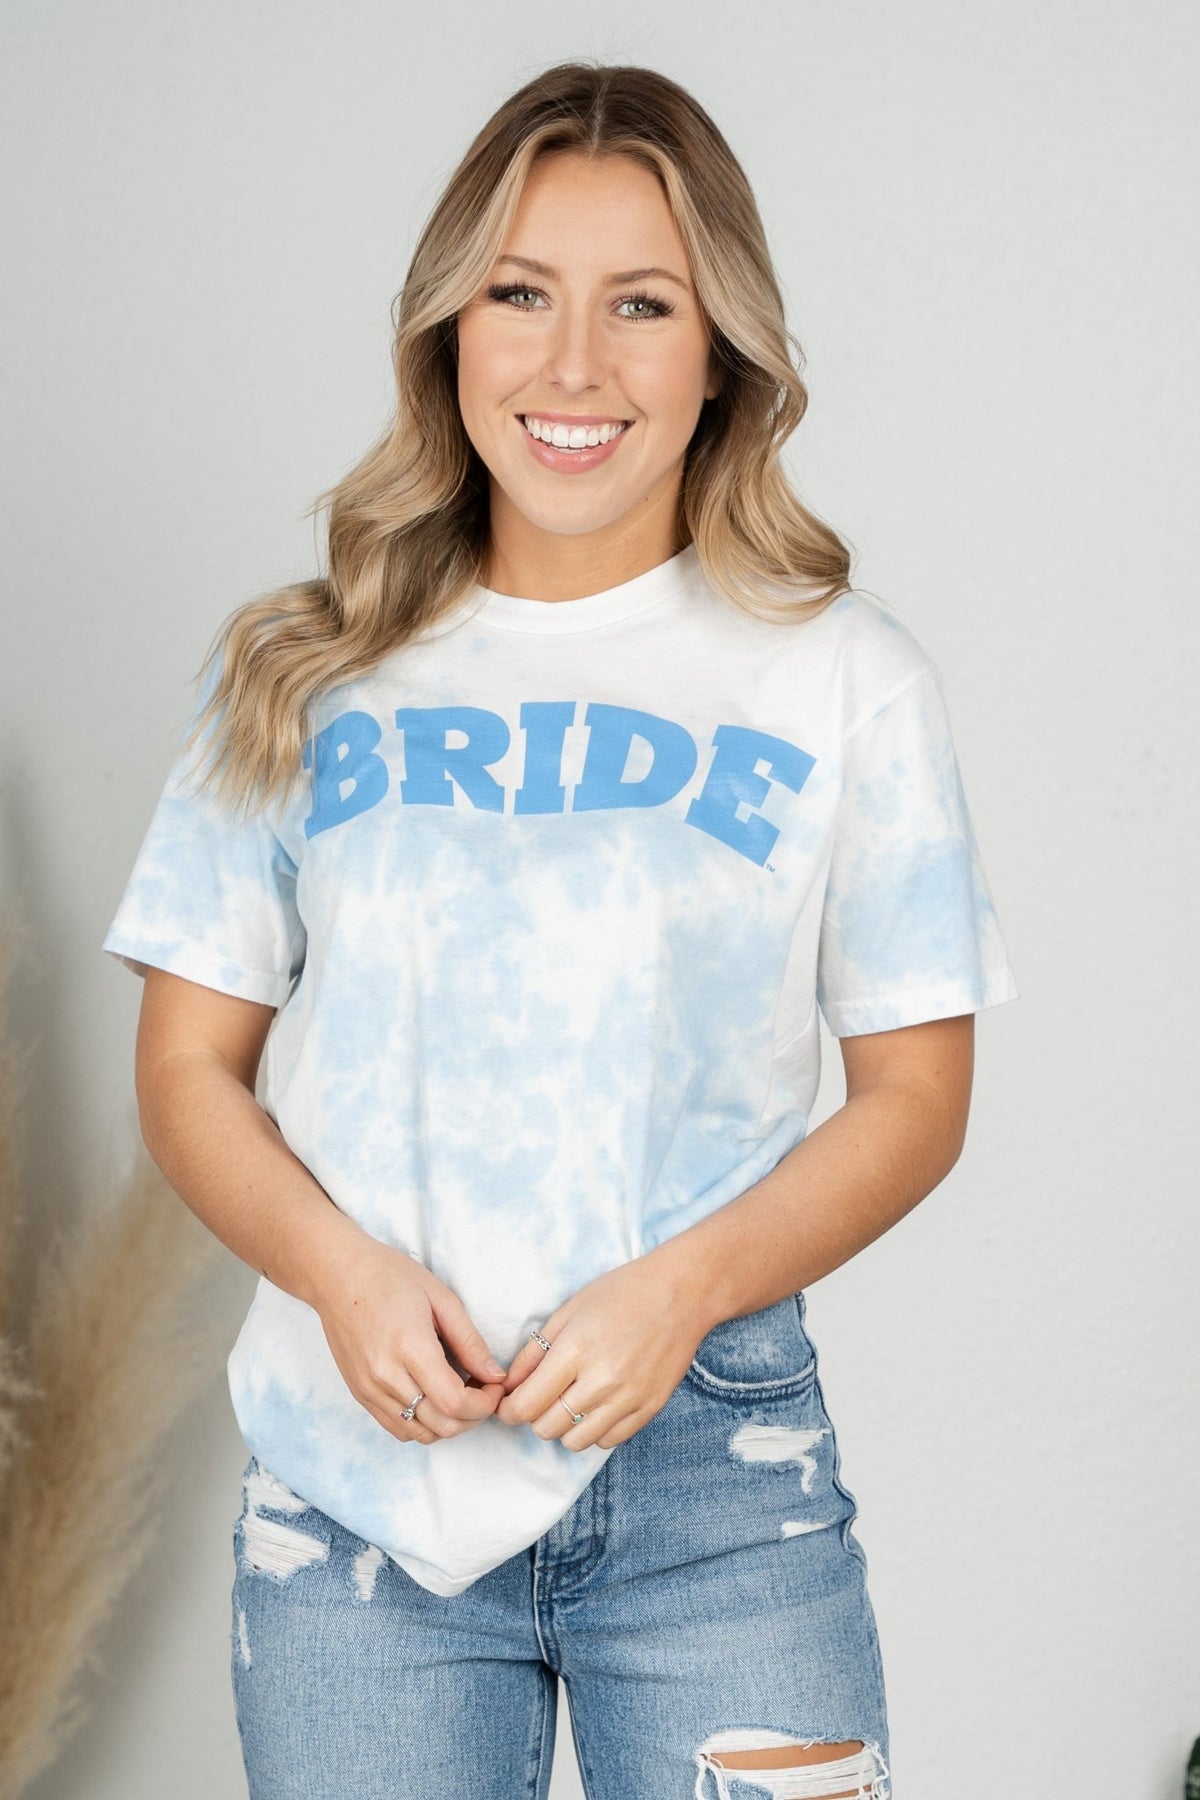 Bride dream on tie dye t-shirt blue - Tie Dye T-shirts - Tie Dye Clothing at Lush Fashion Lounge Trendy Boutique in Oklahoma City